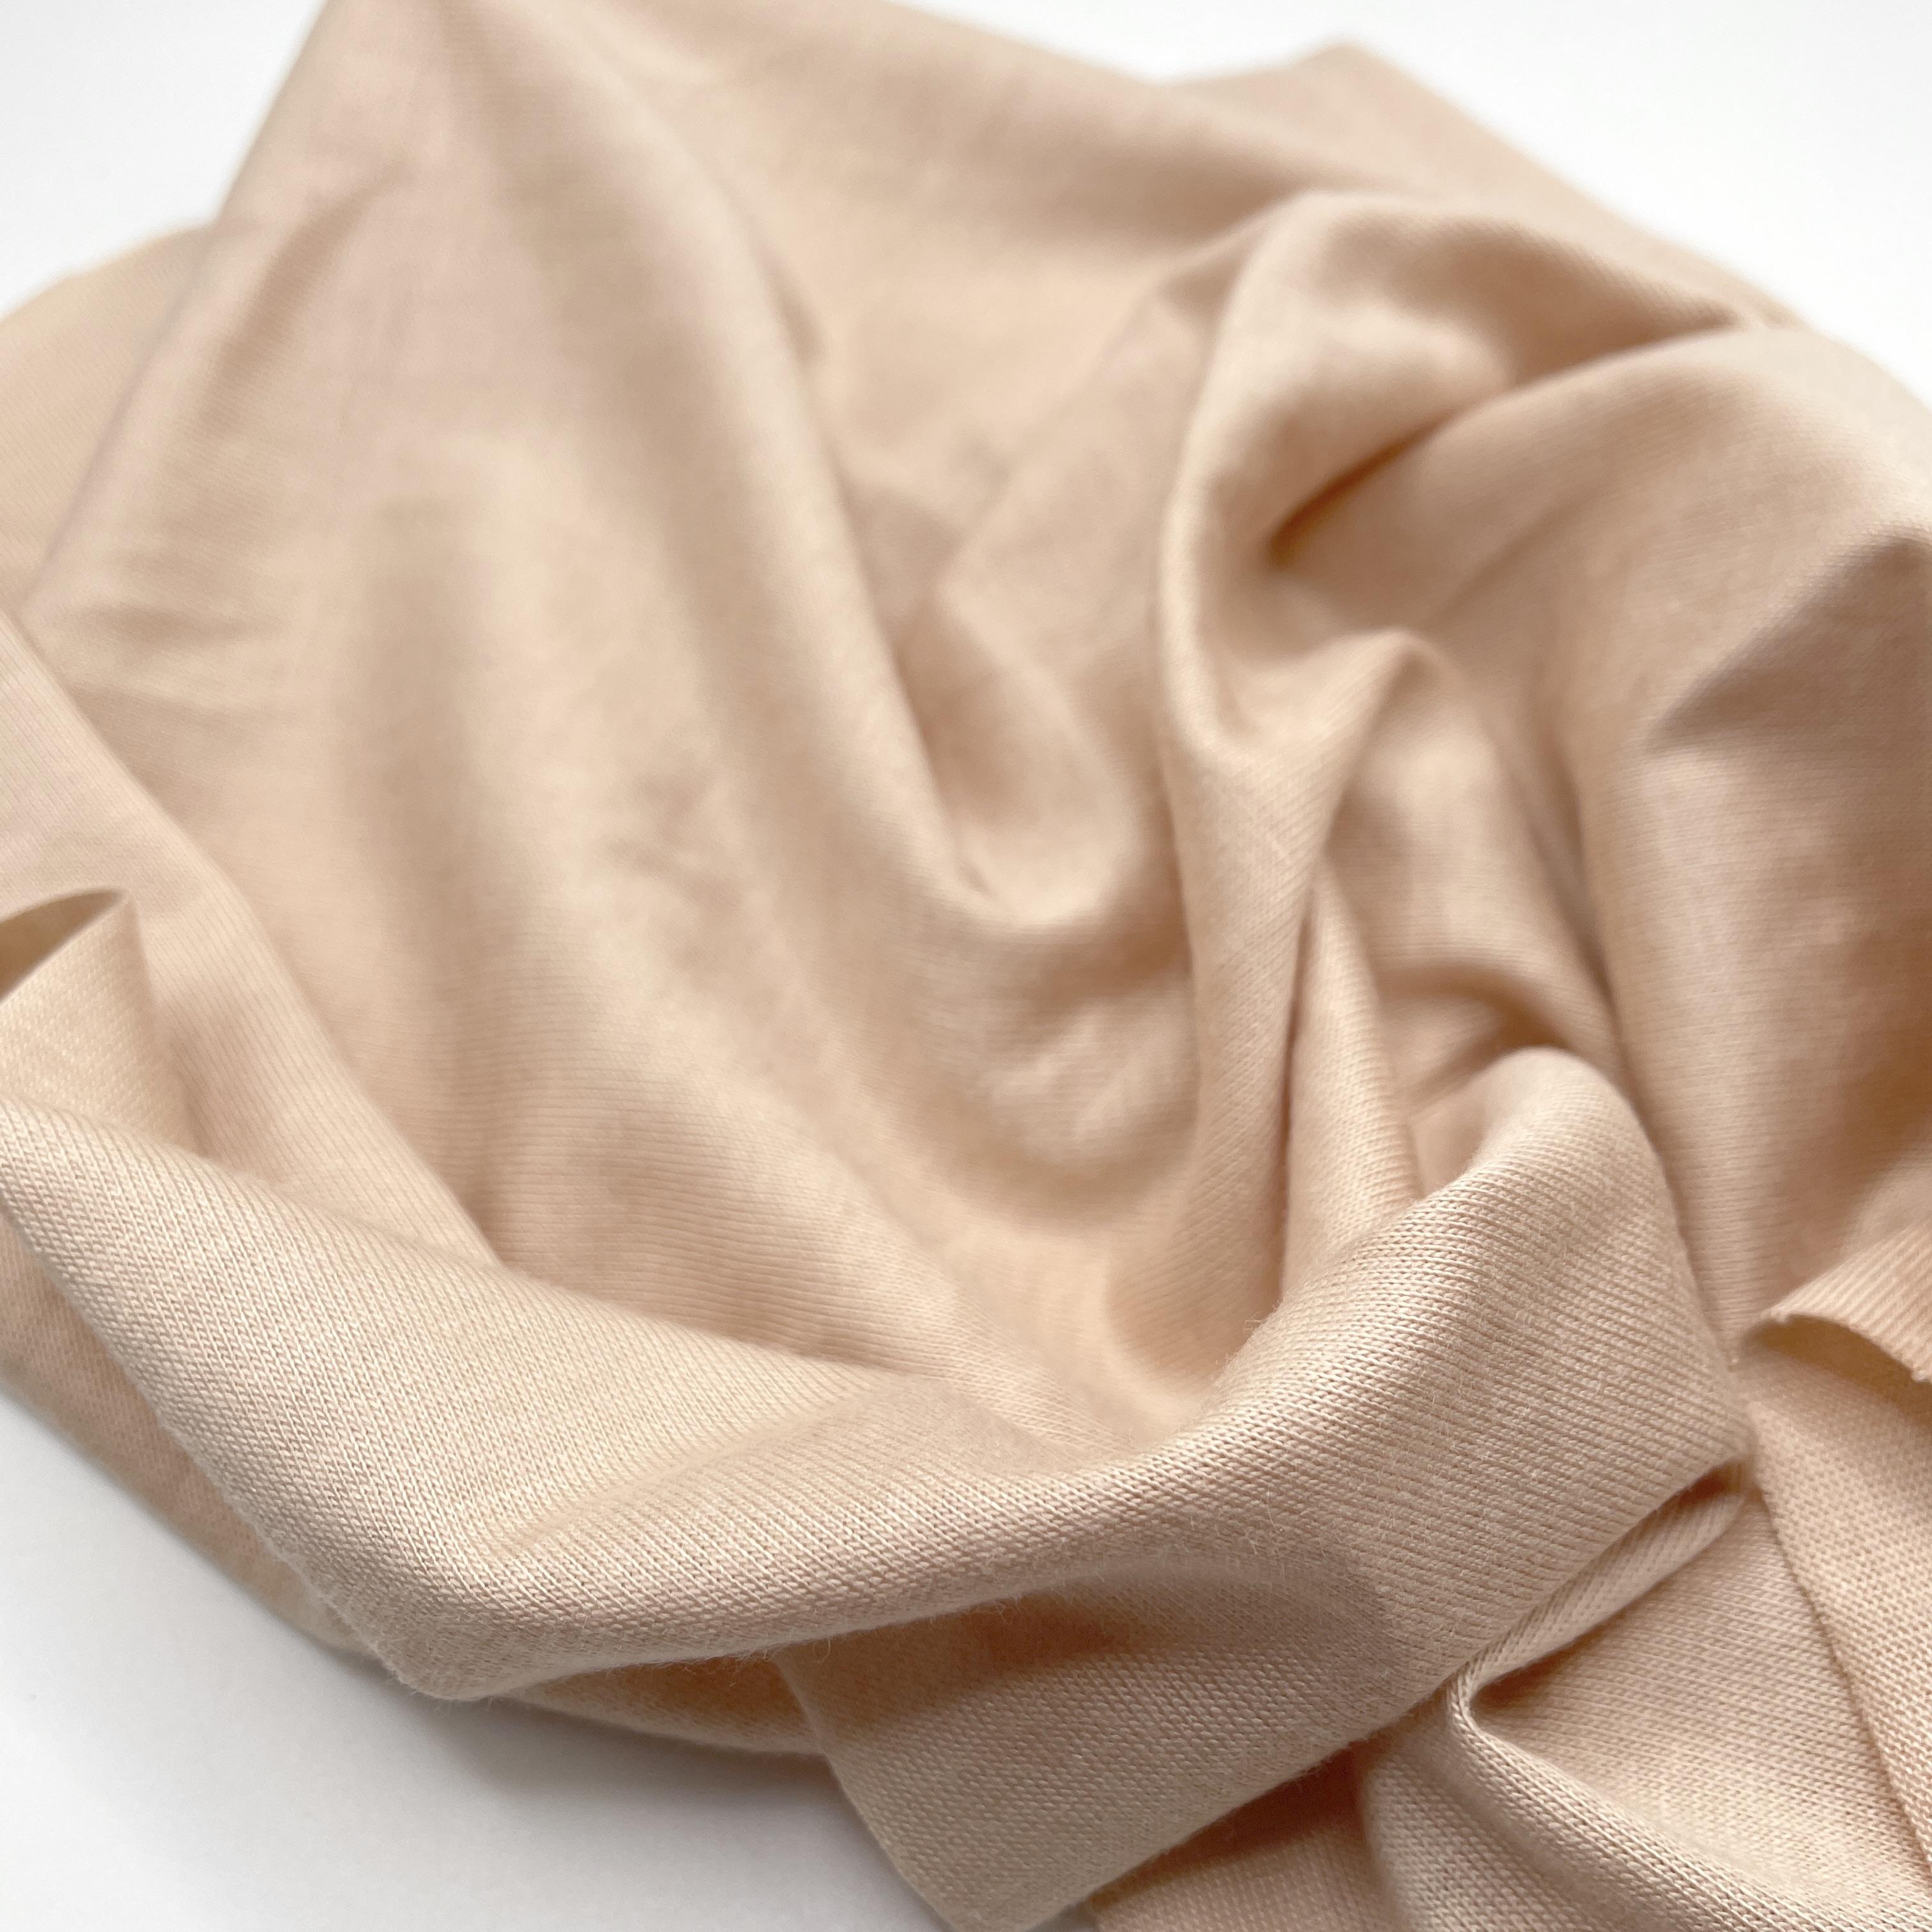 Bra Liner/Cup/Gusset Fabric - Soft Single Jersey - Cotton (100%) 140gsm -  PUMA NUDE (beige skintone)